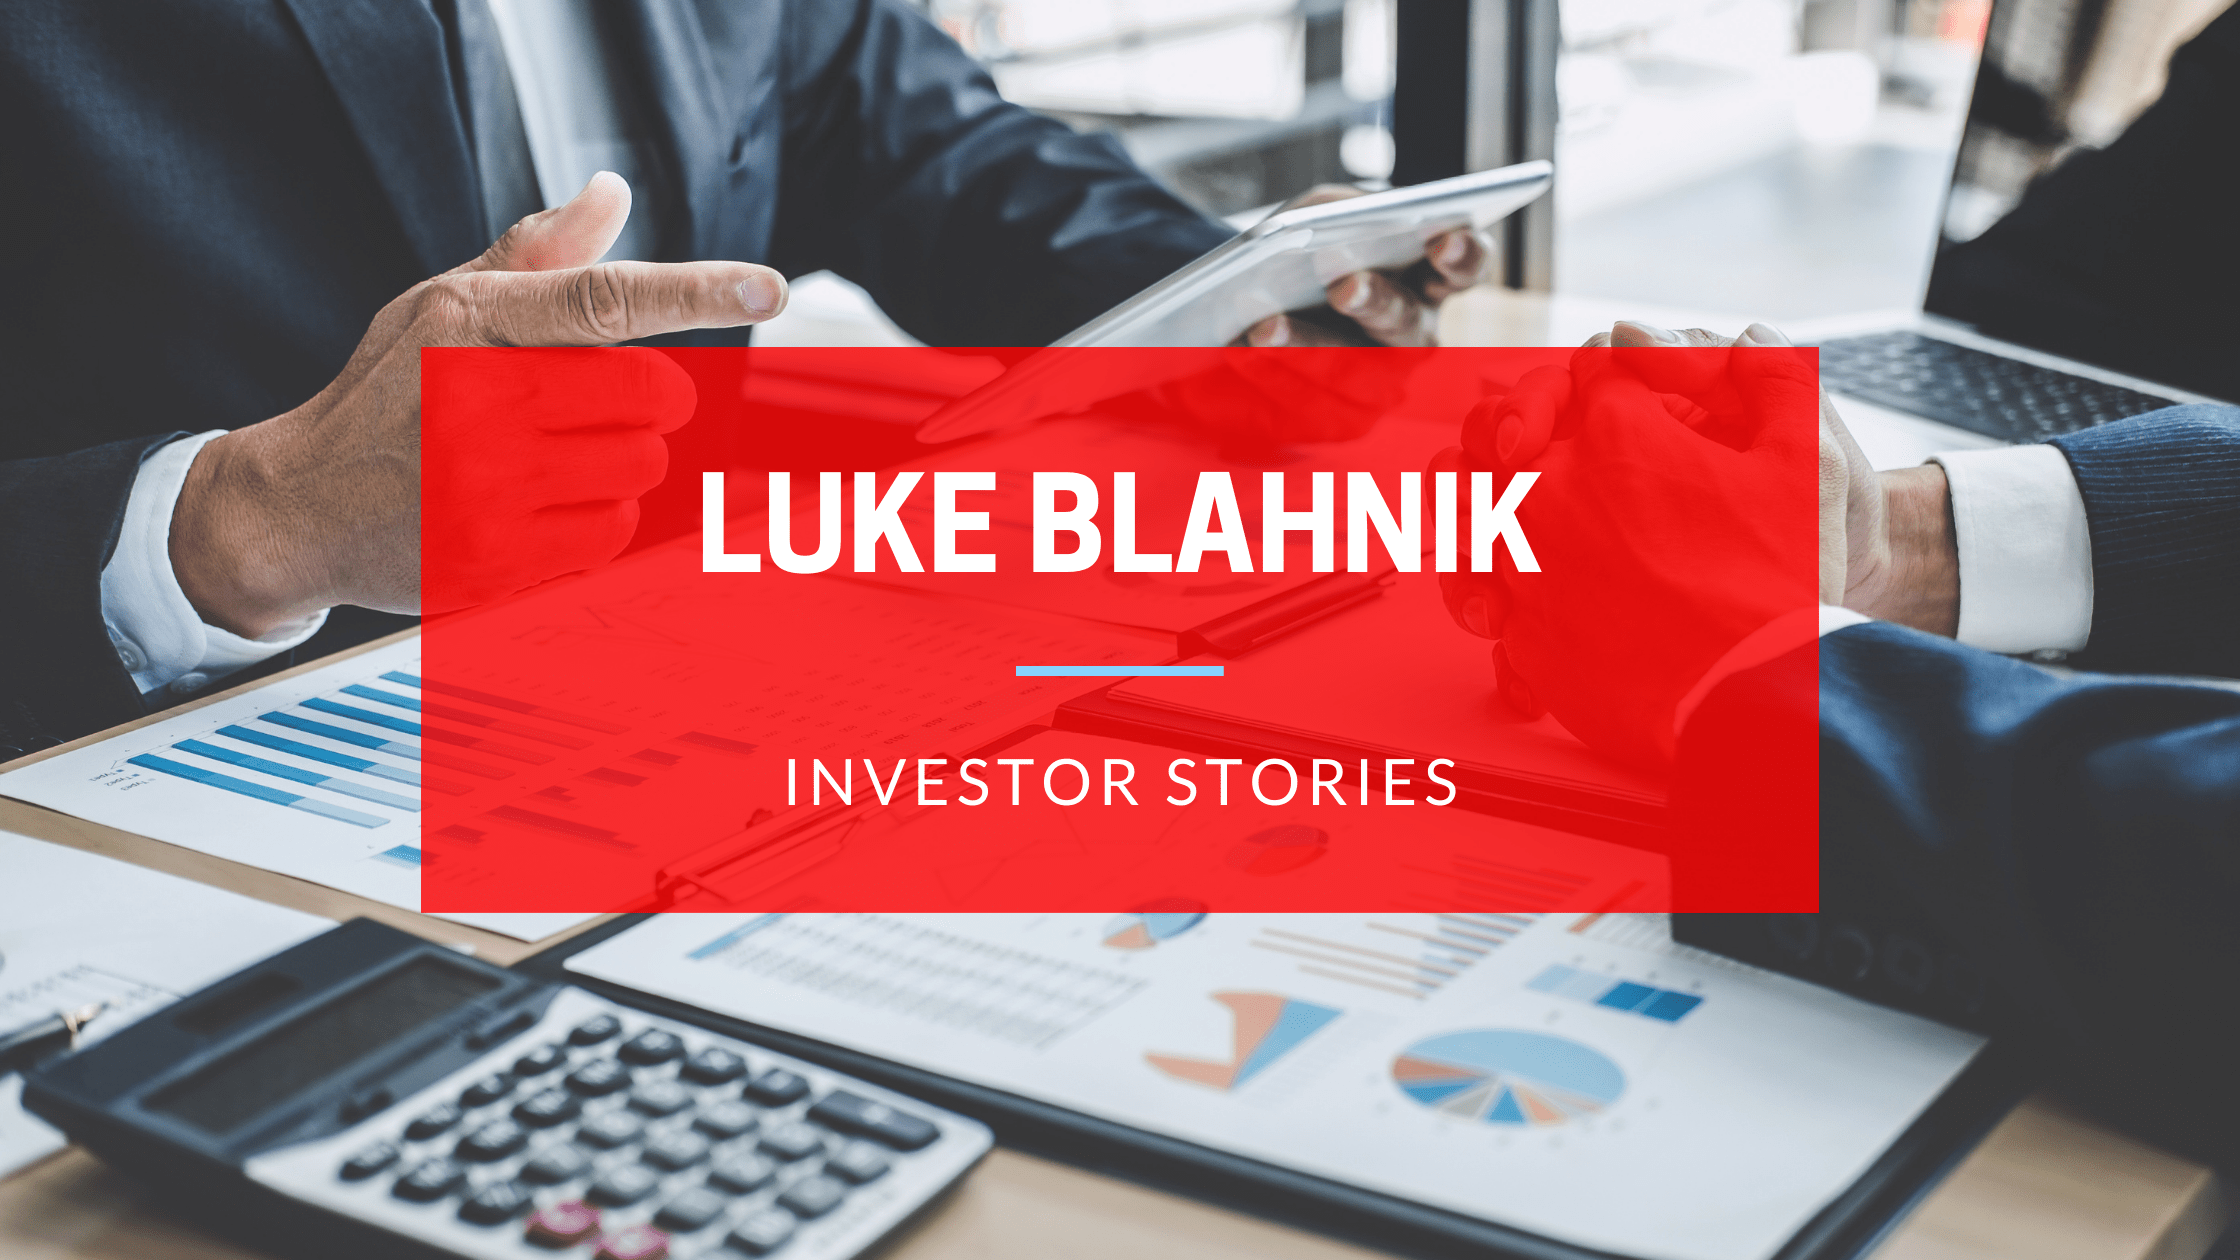 INVESTOR STORY FEATURING LUKE BLAHNIK